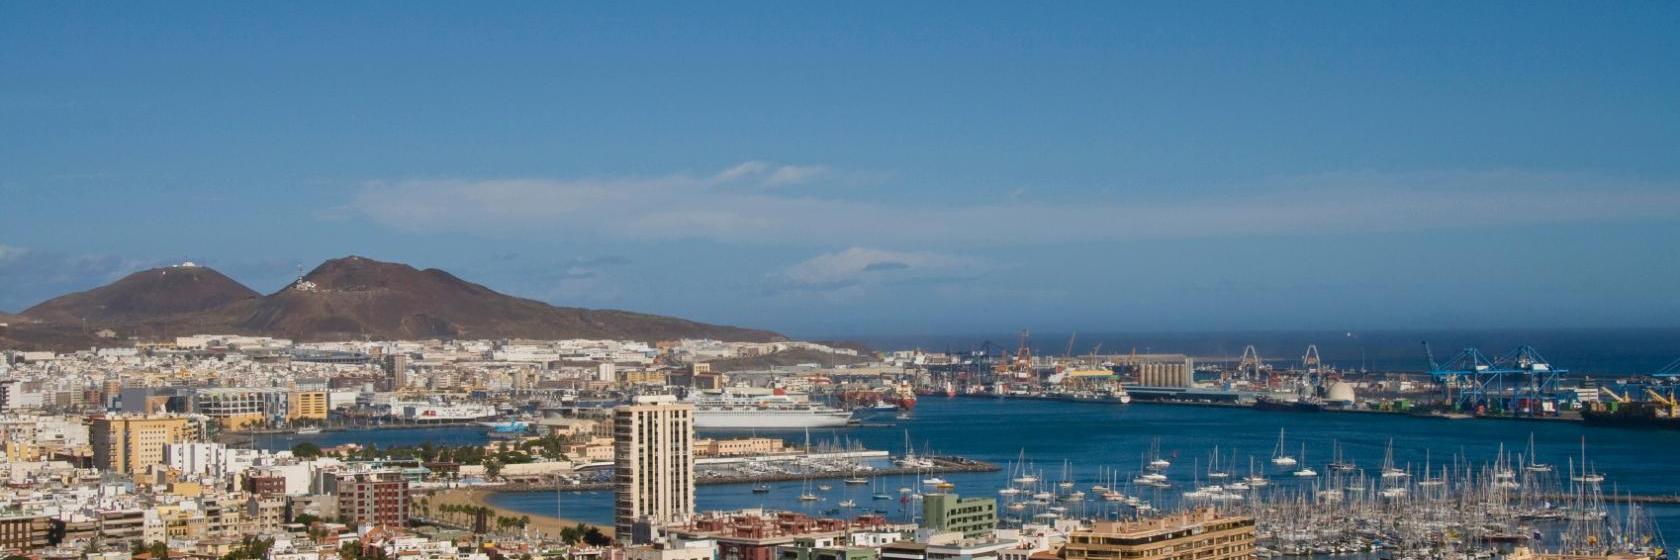 10 Best Las Palmas de Gran Canaria Hotels, Spain (From $36)